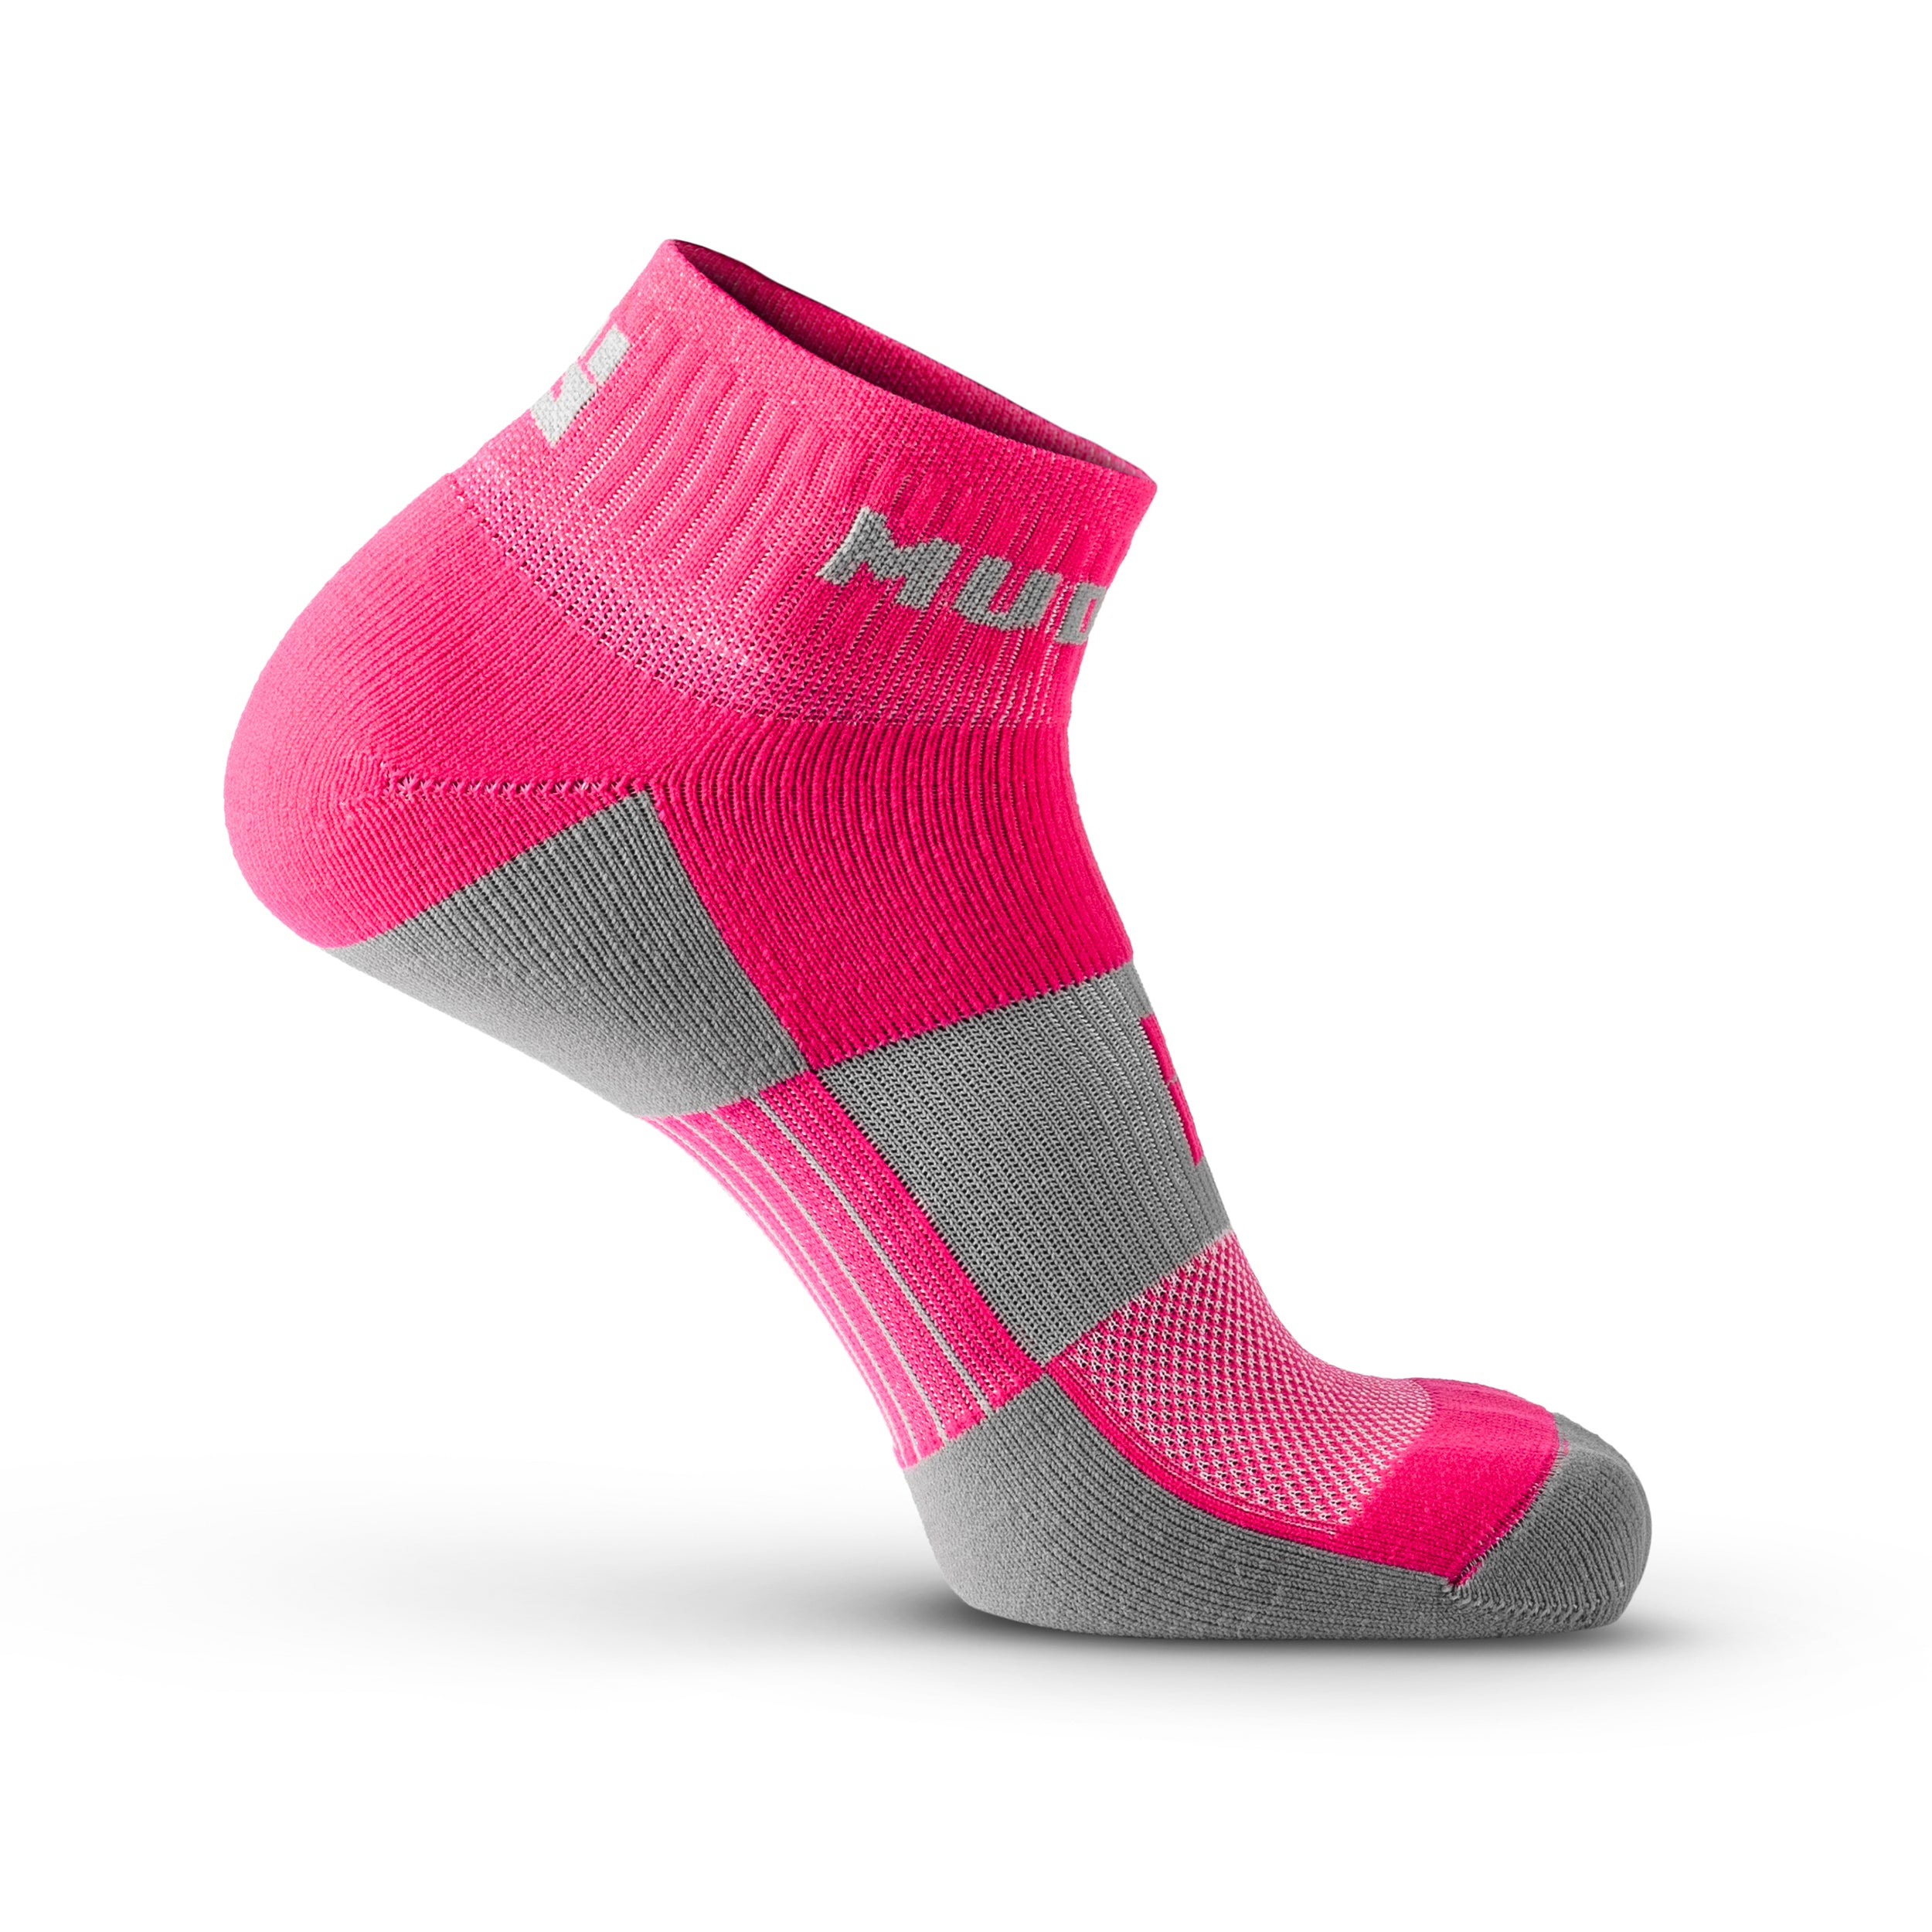 MudGear Quarter (?) Crew Socks - Pink/Gray (2 pair pack)